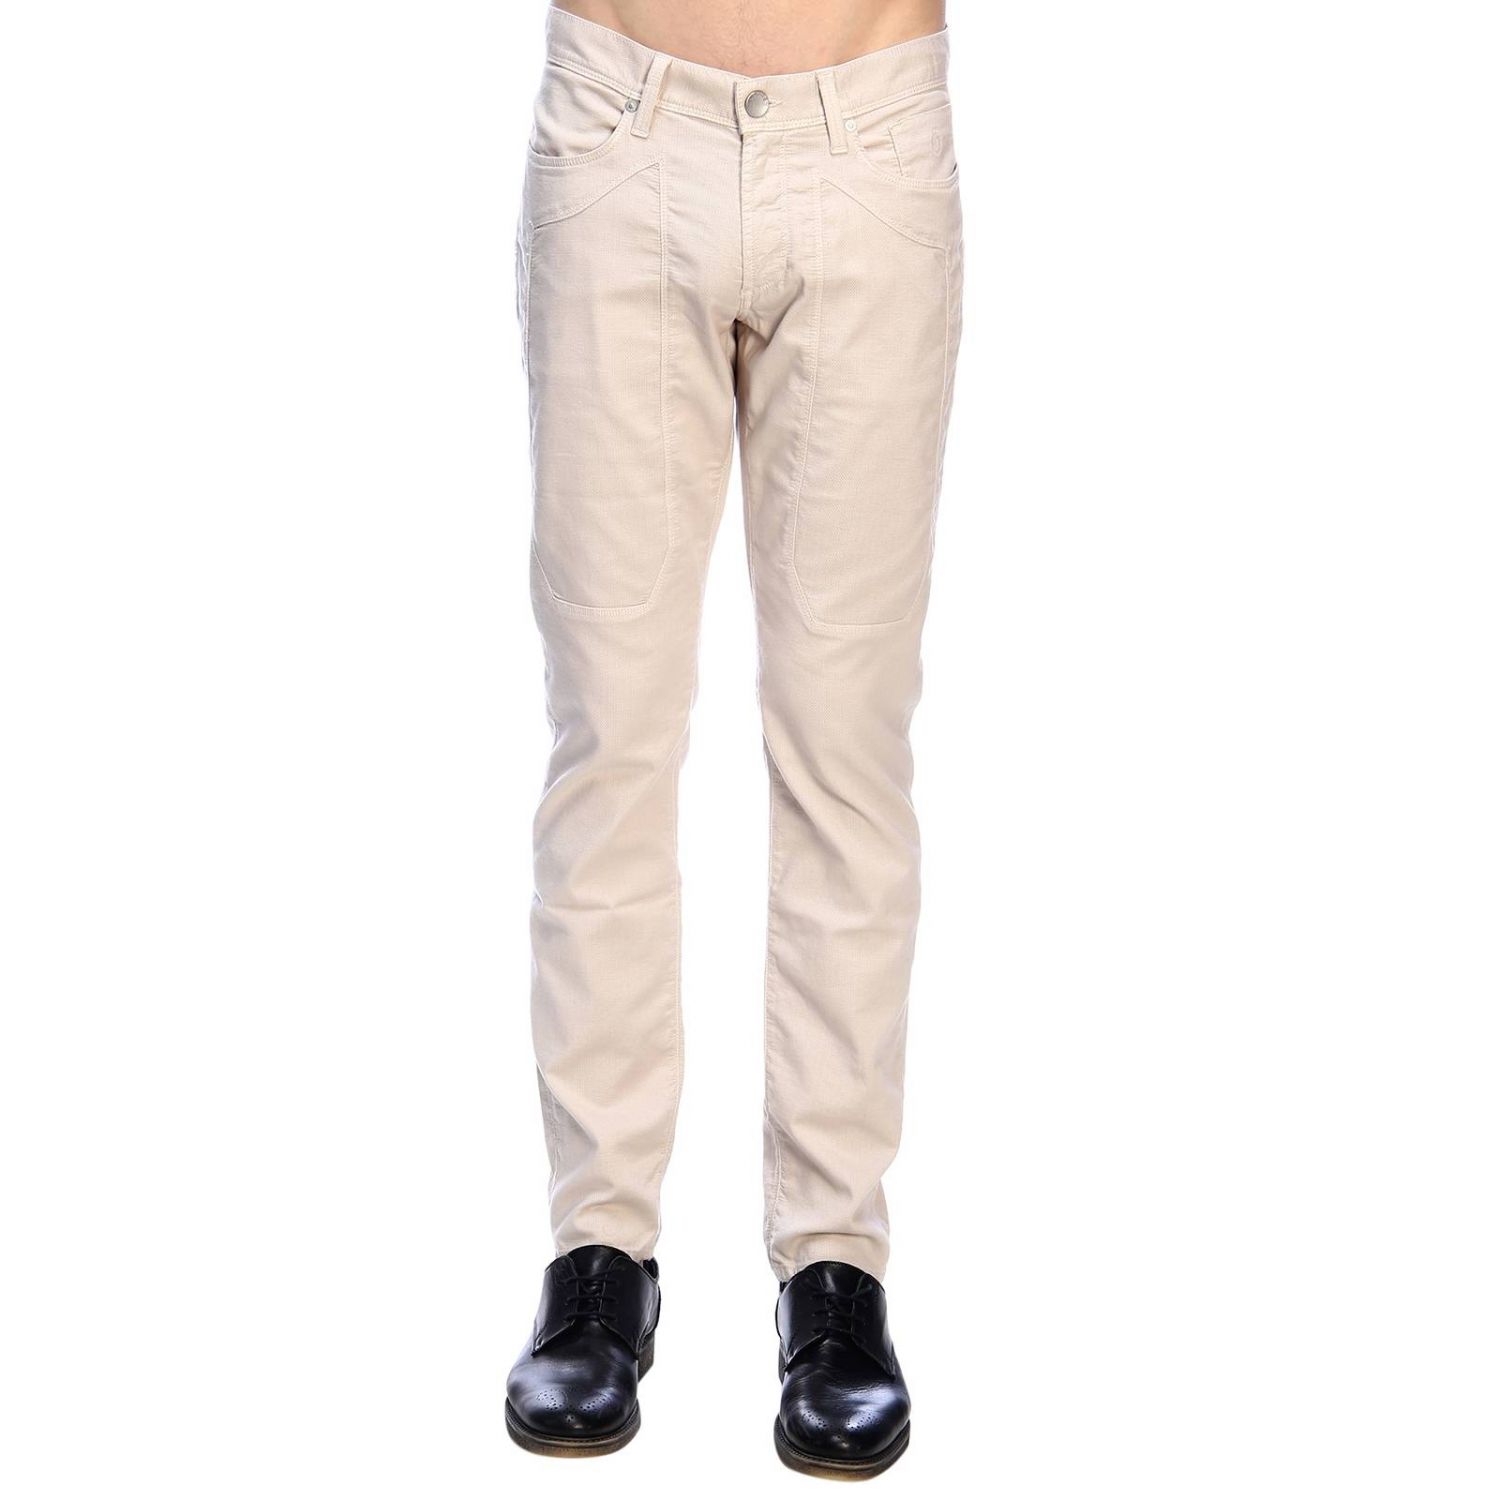 Jeckerson Outlet: Pants men - Beige | Pants Jeckerson PA077 T012288 ...